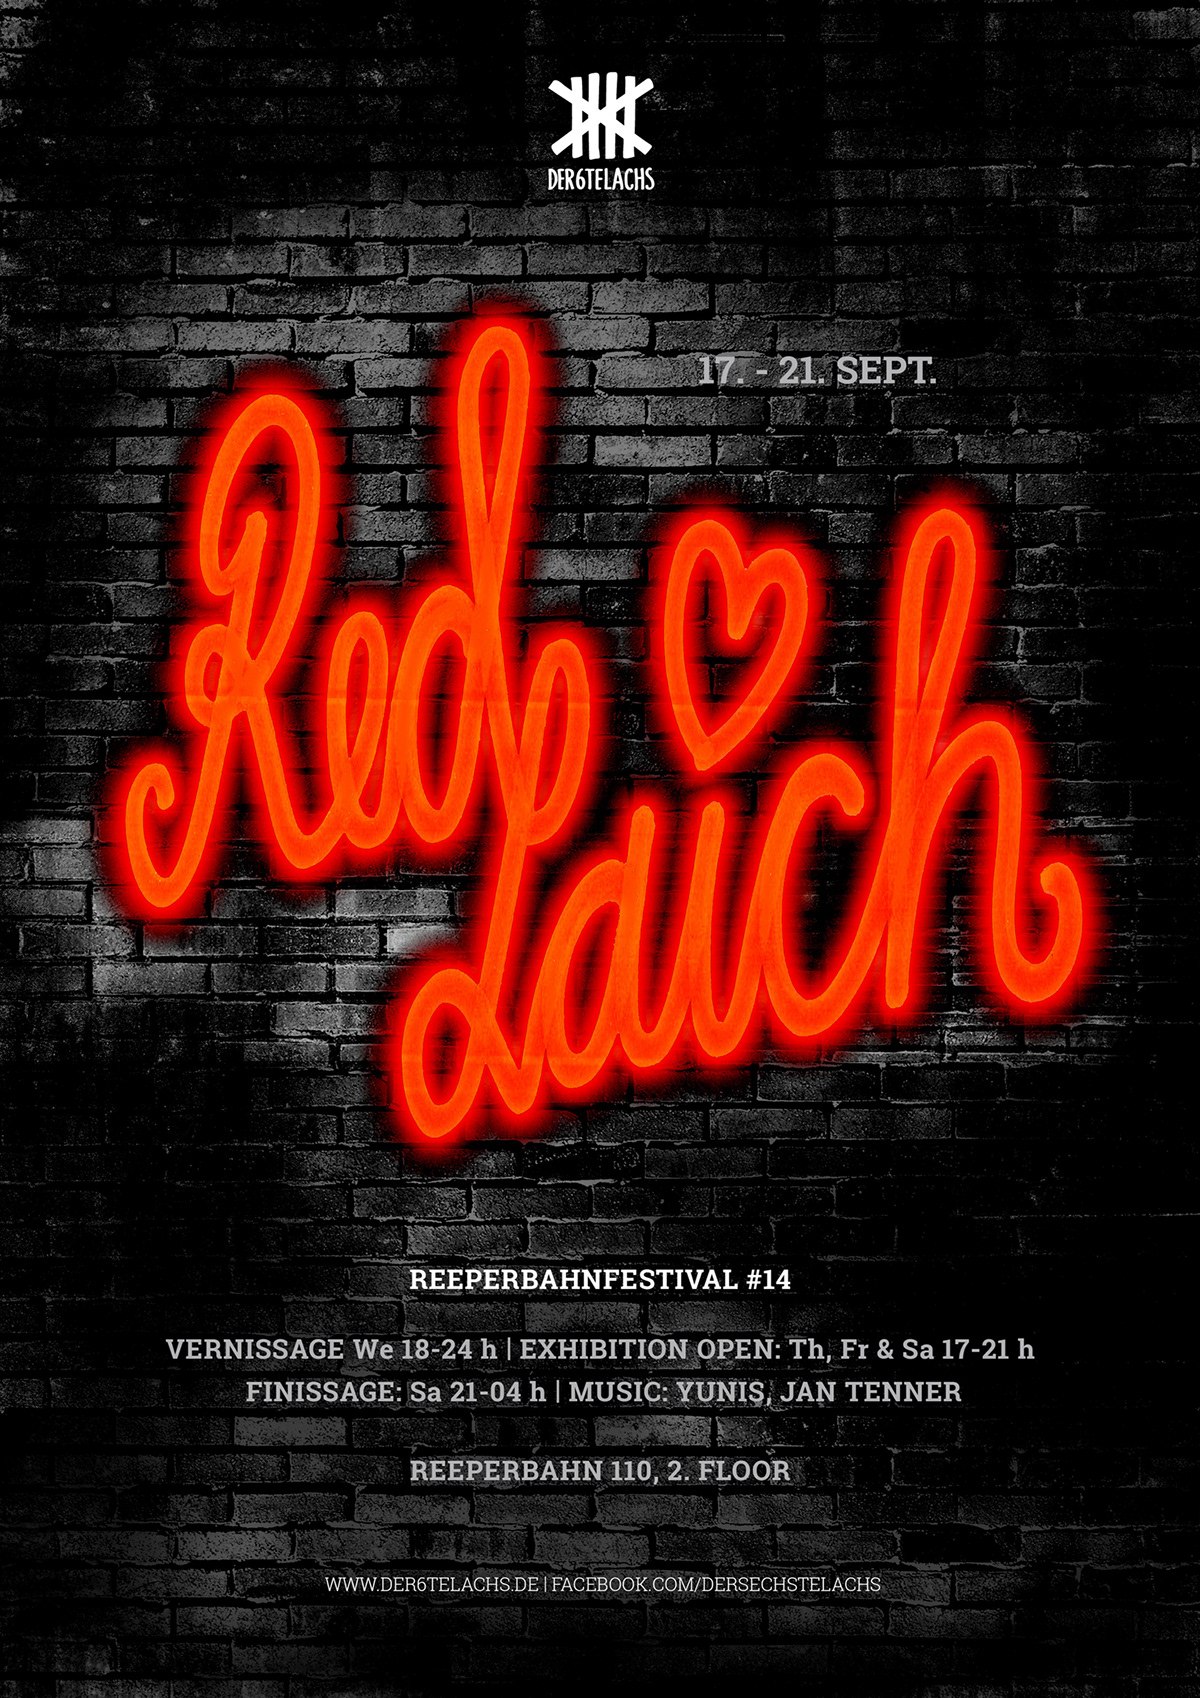 Reeperbahn festival 2014 der 6te lachs hamburg reeperbahn Exhibition  poster